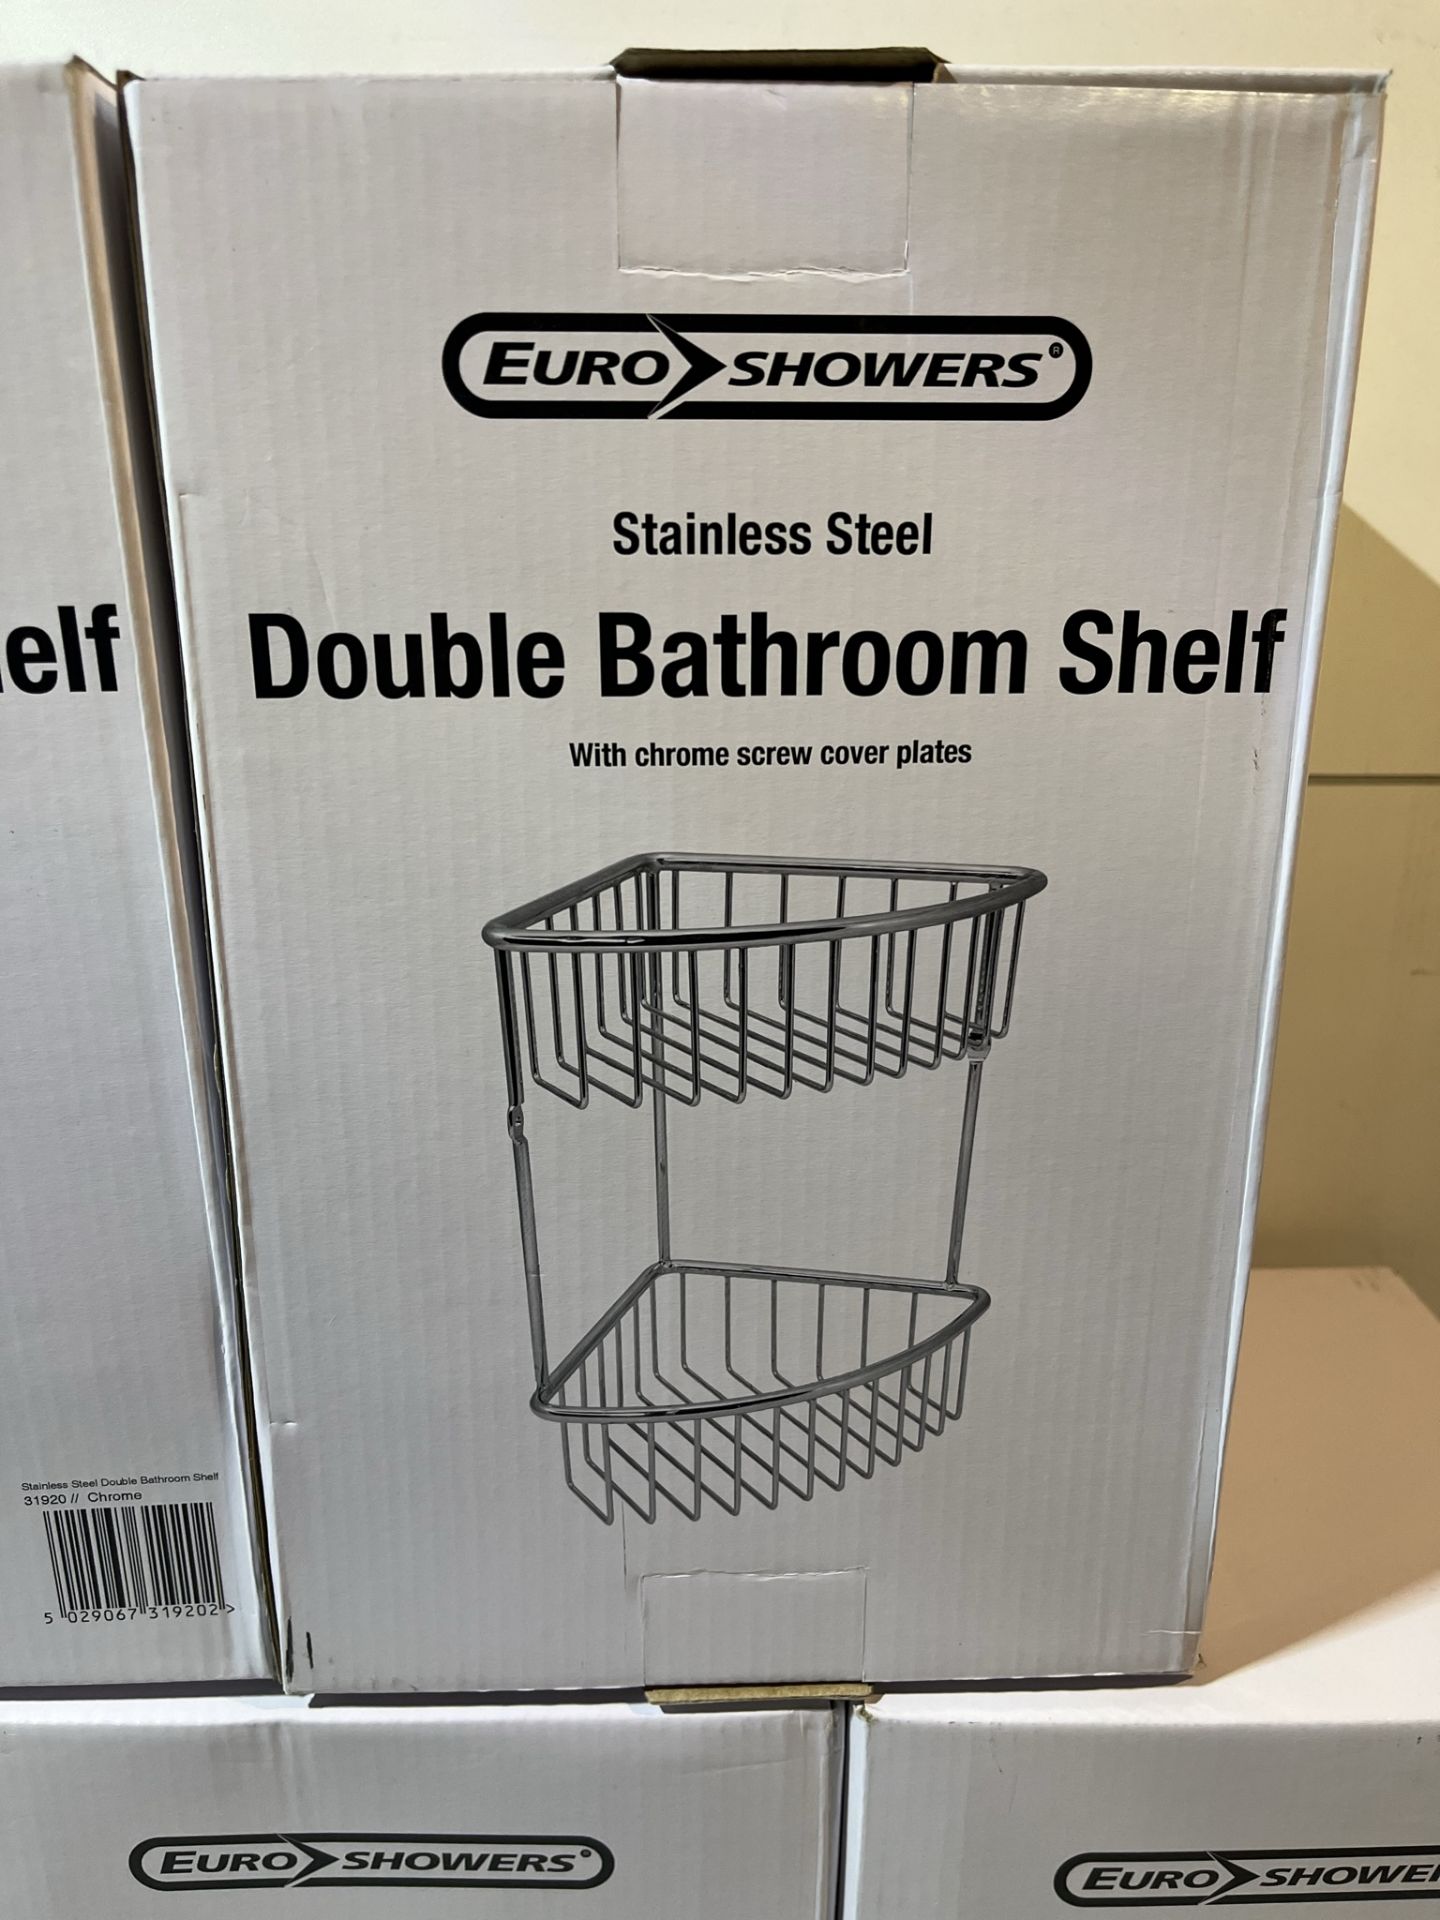 5 x Euro Showers Stainless Steel Double Bathroom Shelfs - Image 2 of 2